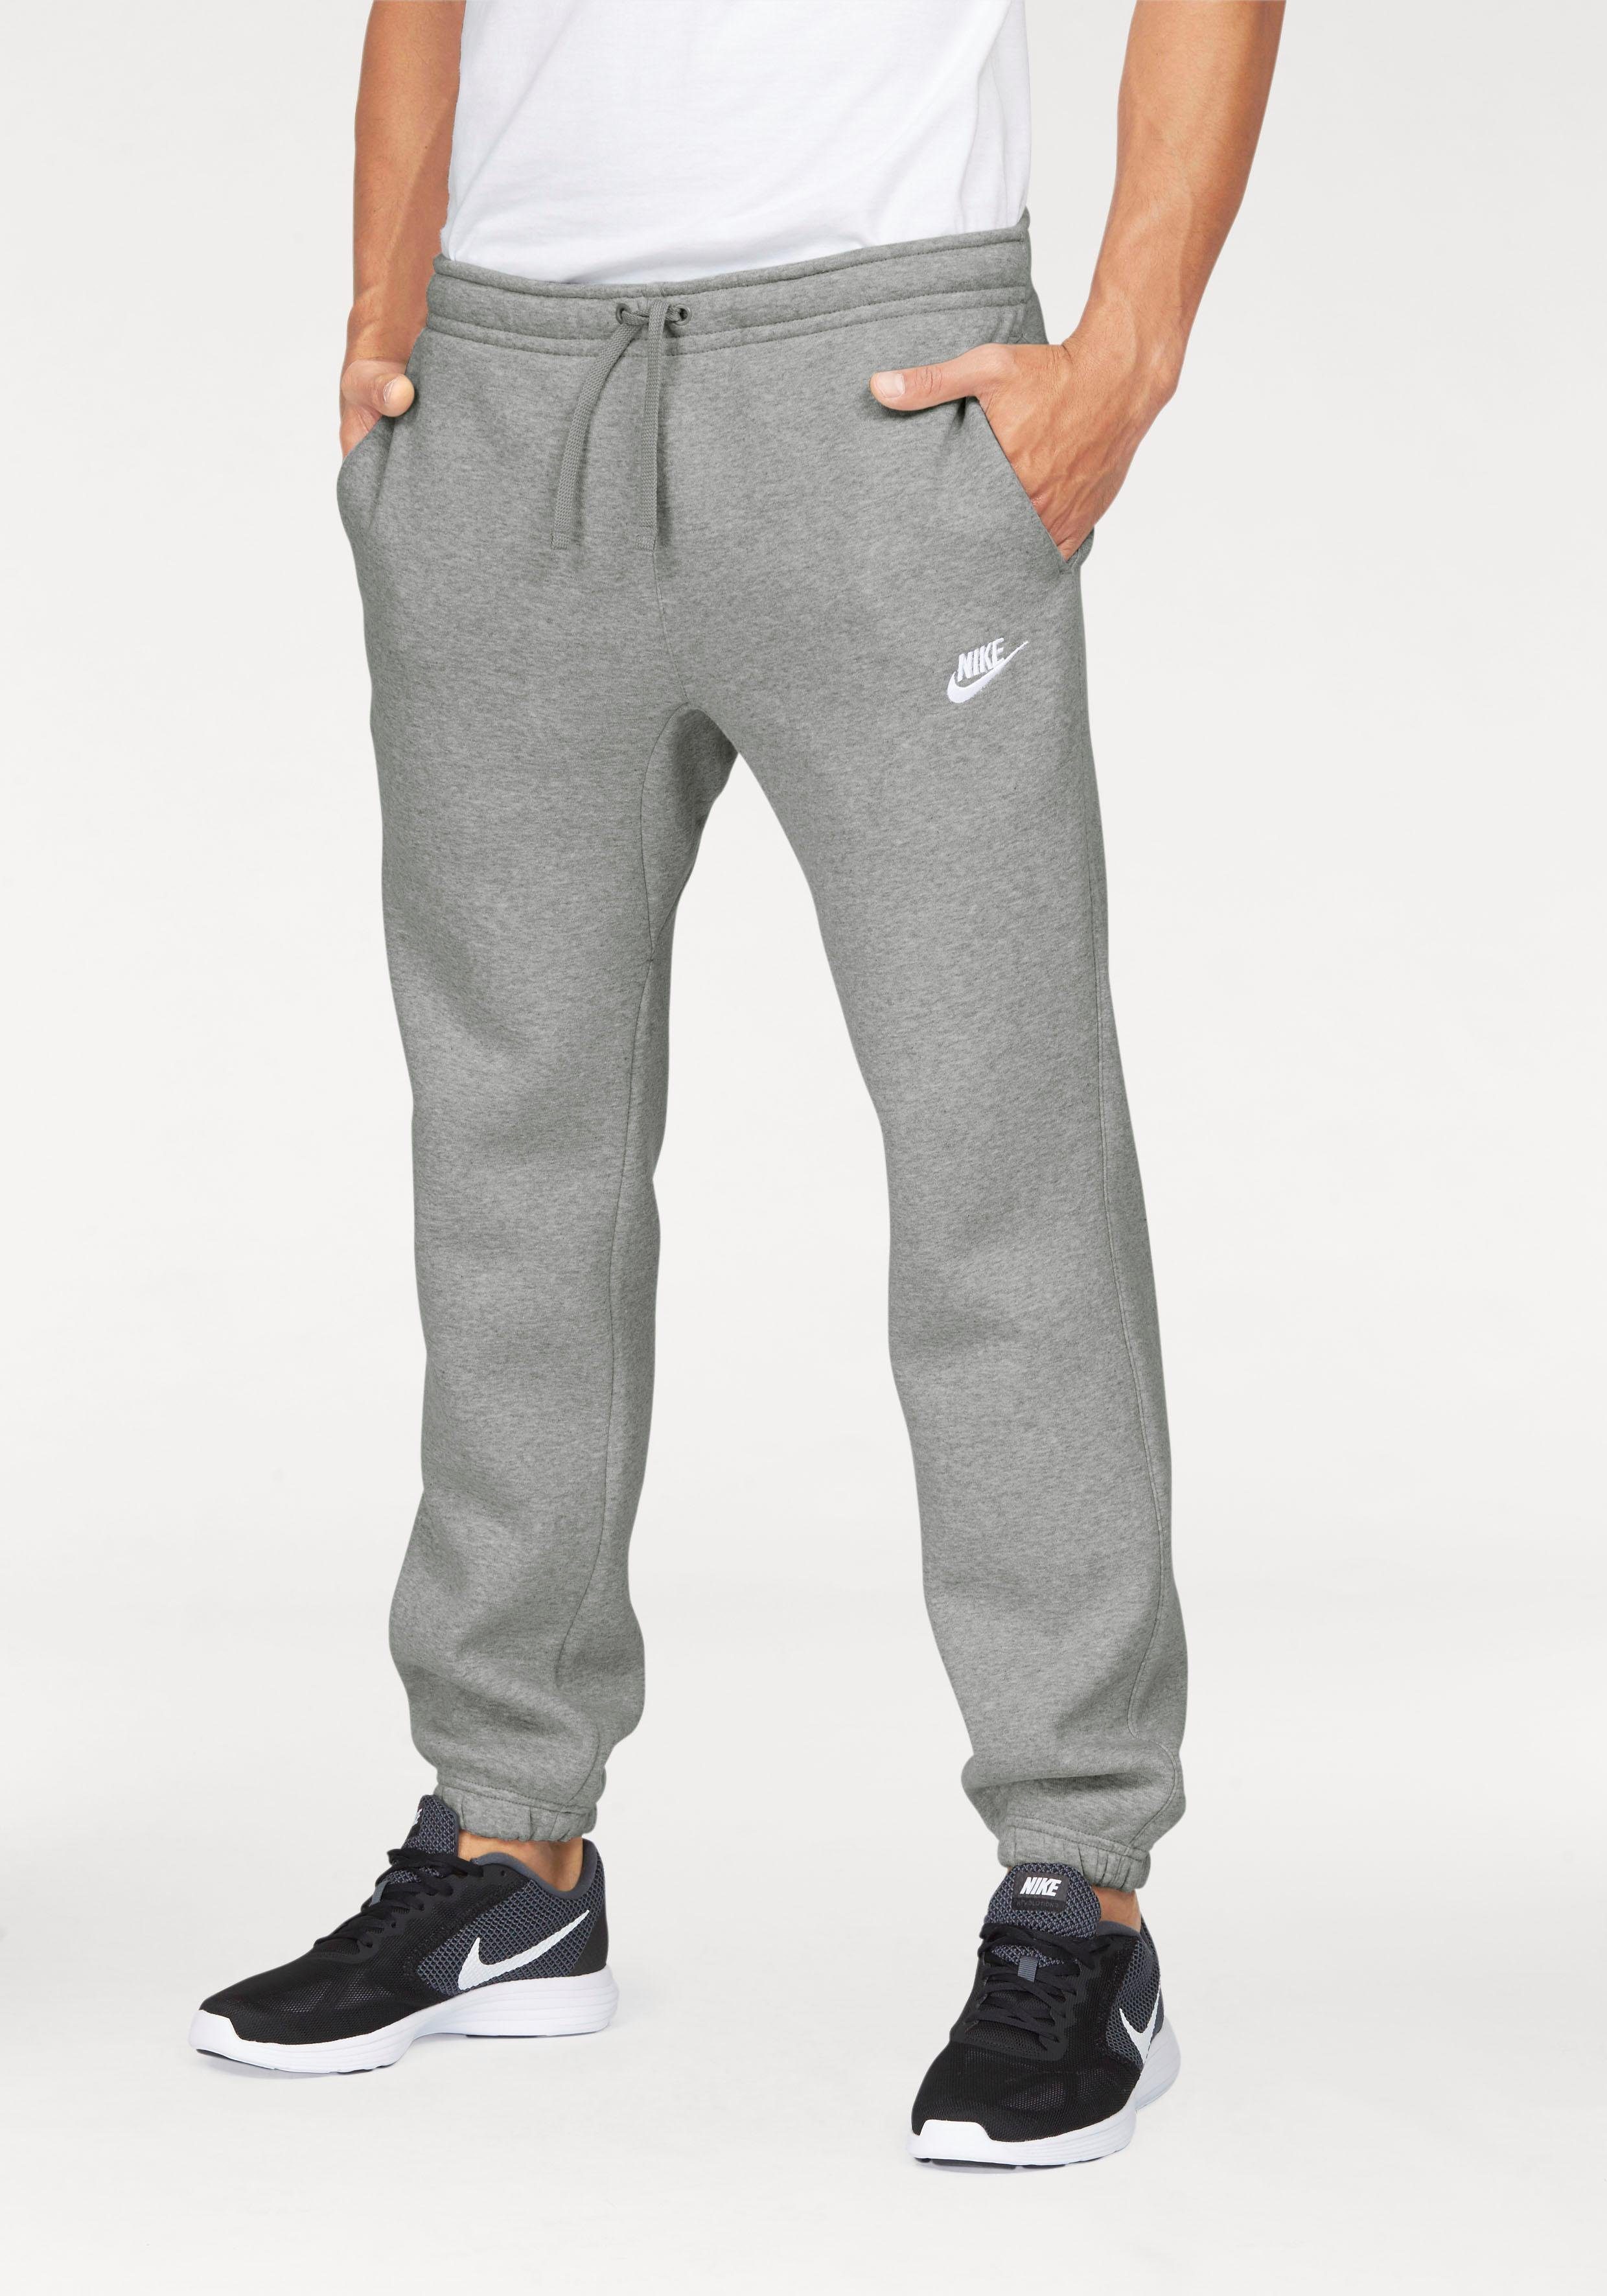 Nike Sportswear Jogginghose »NSW PANT CUFF FLEECE CLUB« online kaufen | OTTO